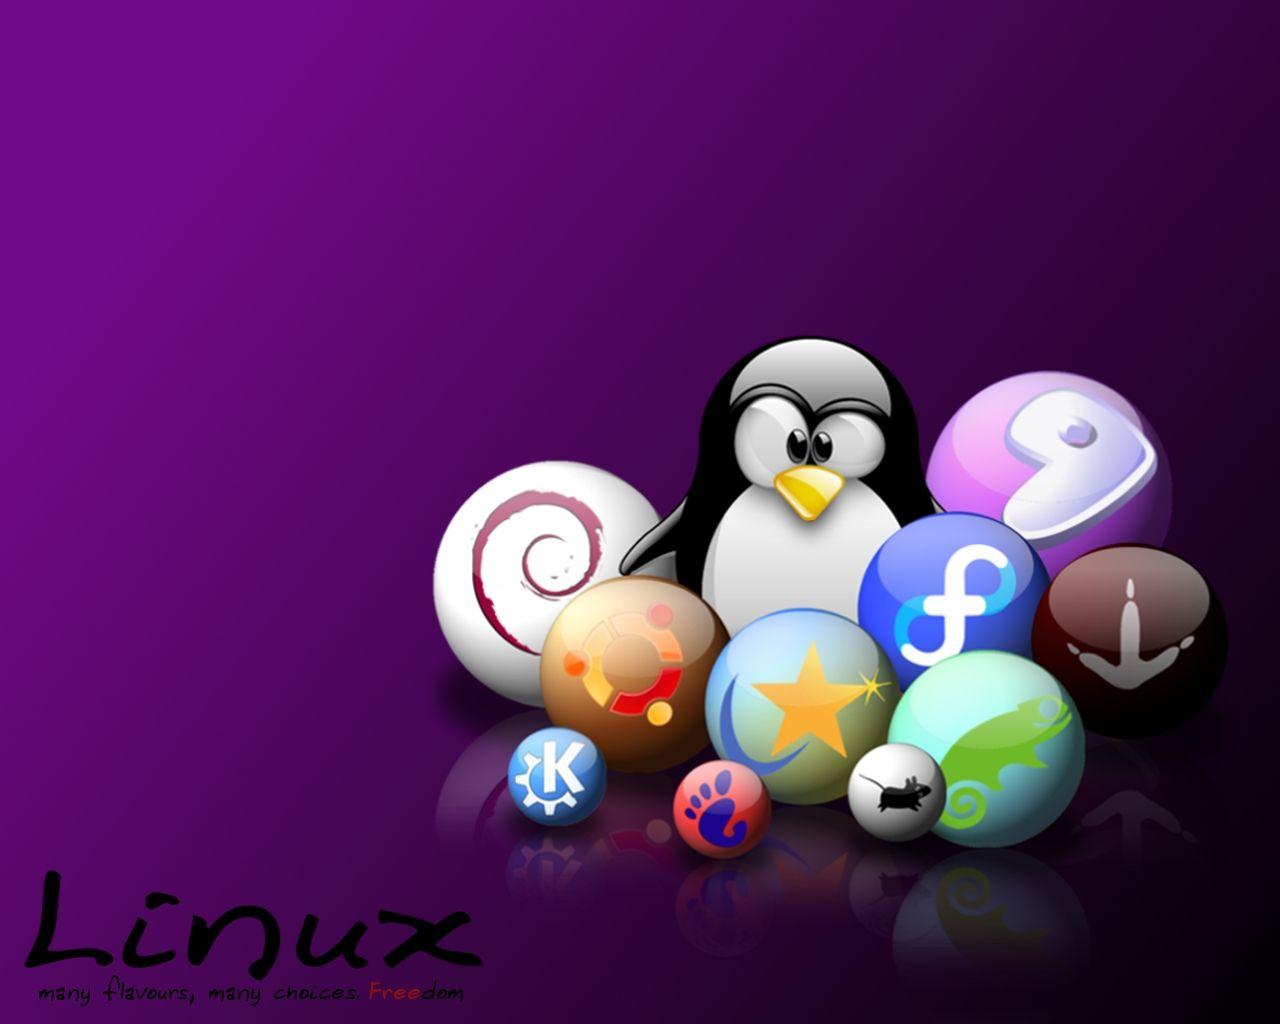 Linux distros by Abel Wallpaper. Nerd. Linux, Desktop